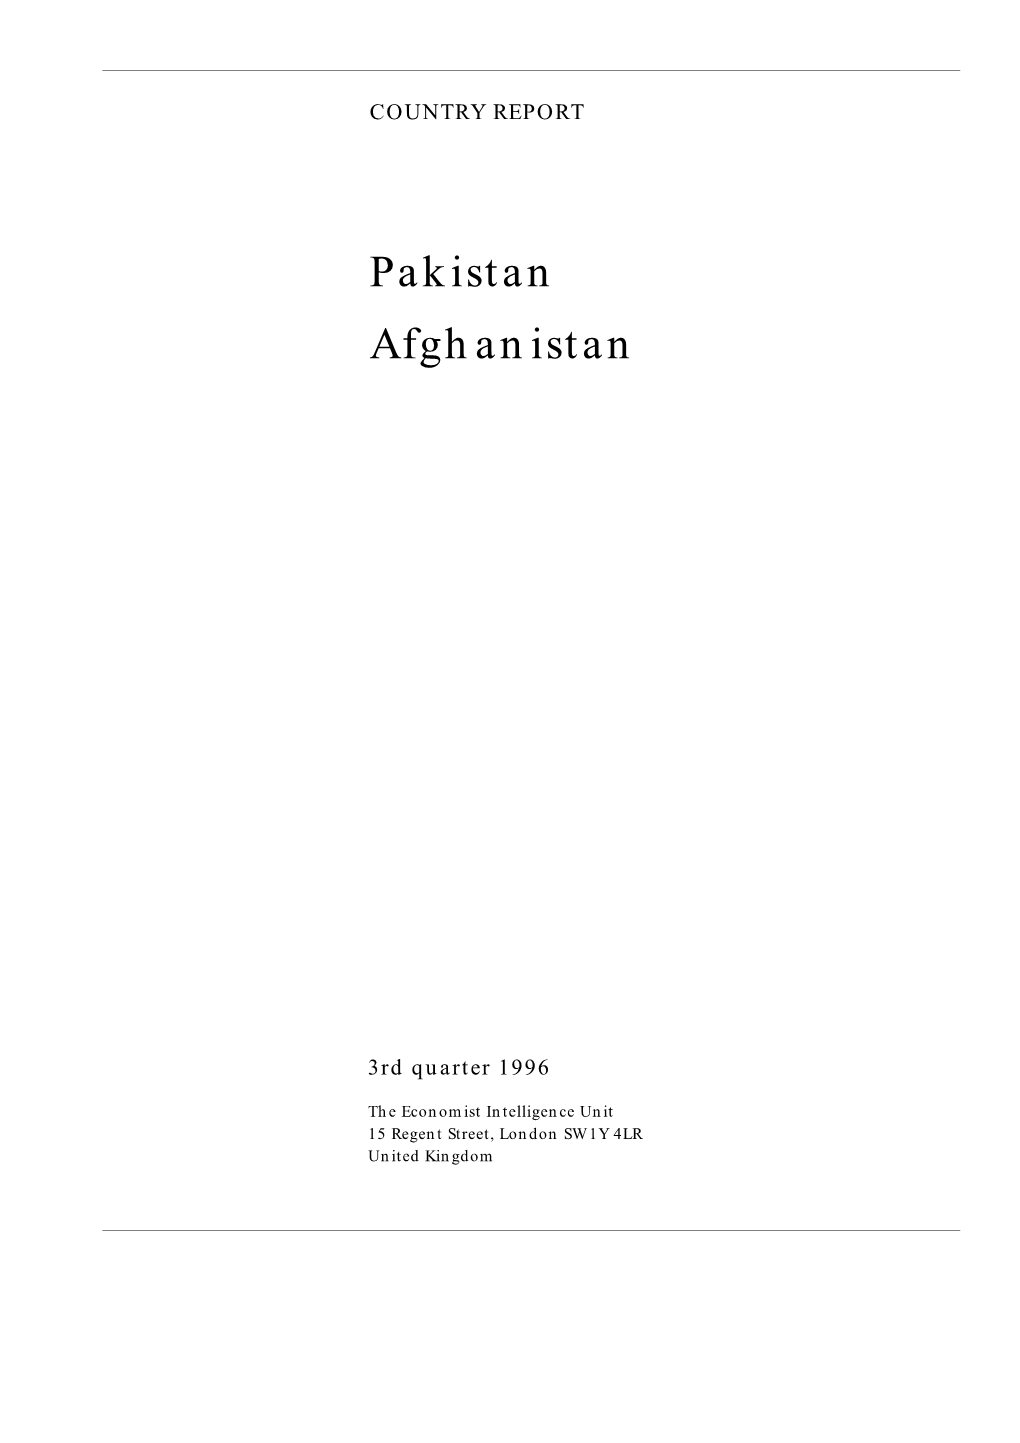 Pakistan Afghanistan